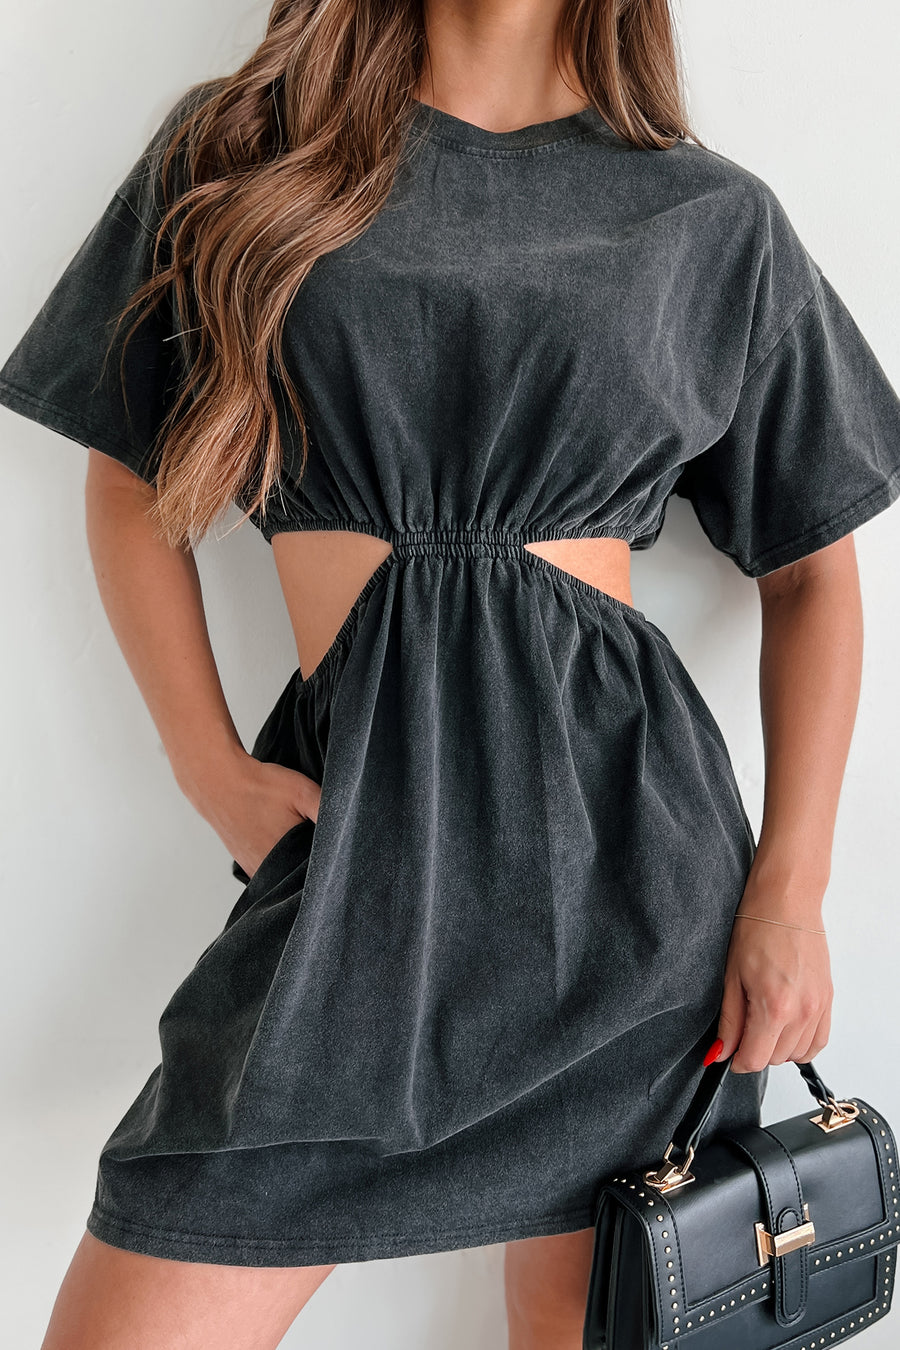 Smooth Moves Vintage Wash Cut-Out T-Shirt Dress (Black) - NanaMacs